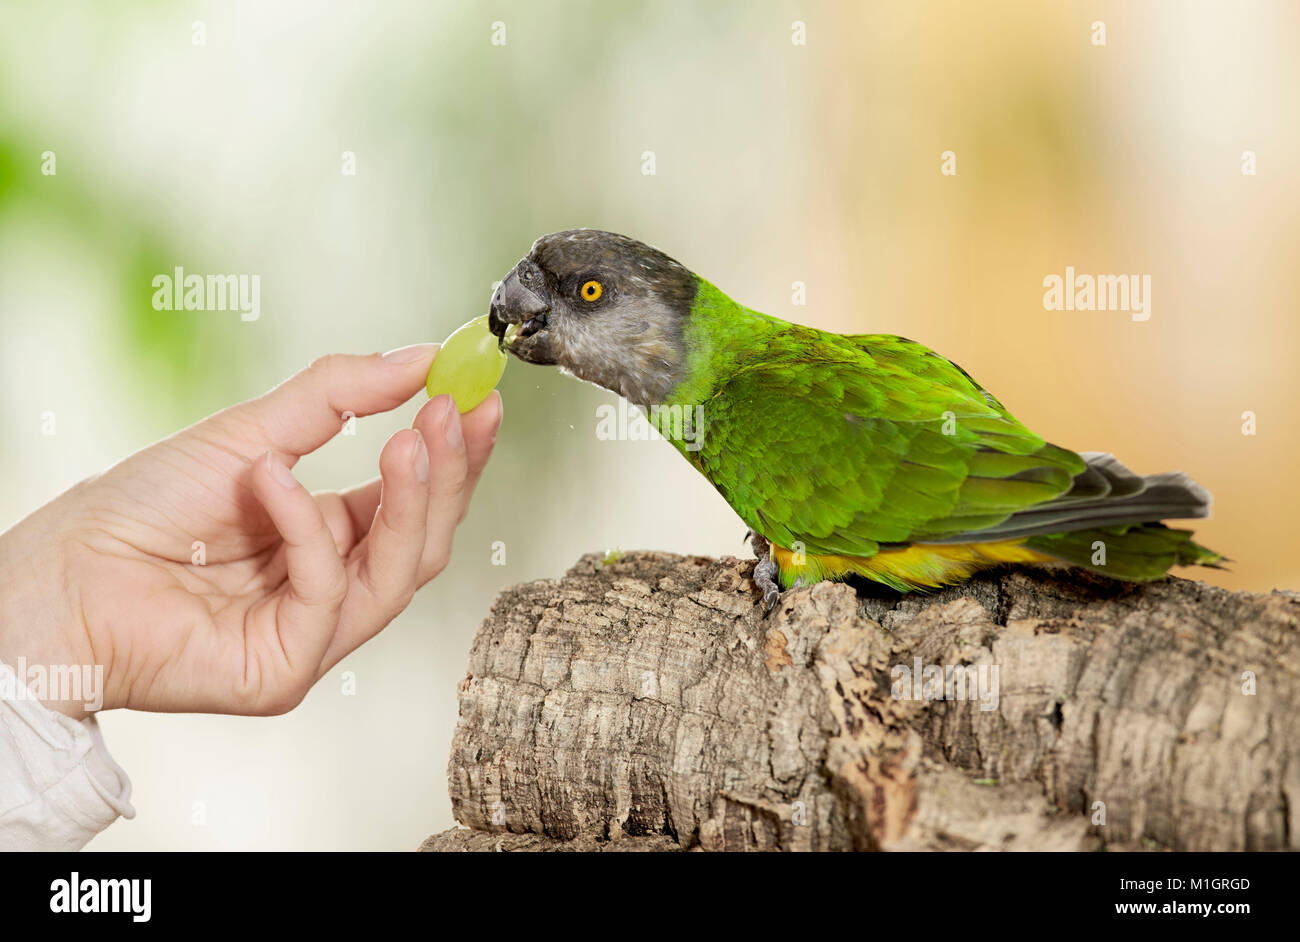 Senegal parrot (Poicephalus senegalus). Adult on hand, eating a grape. Germany Stock Photo